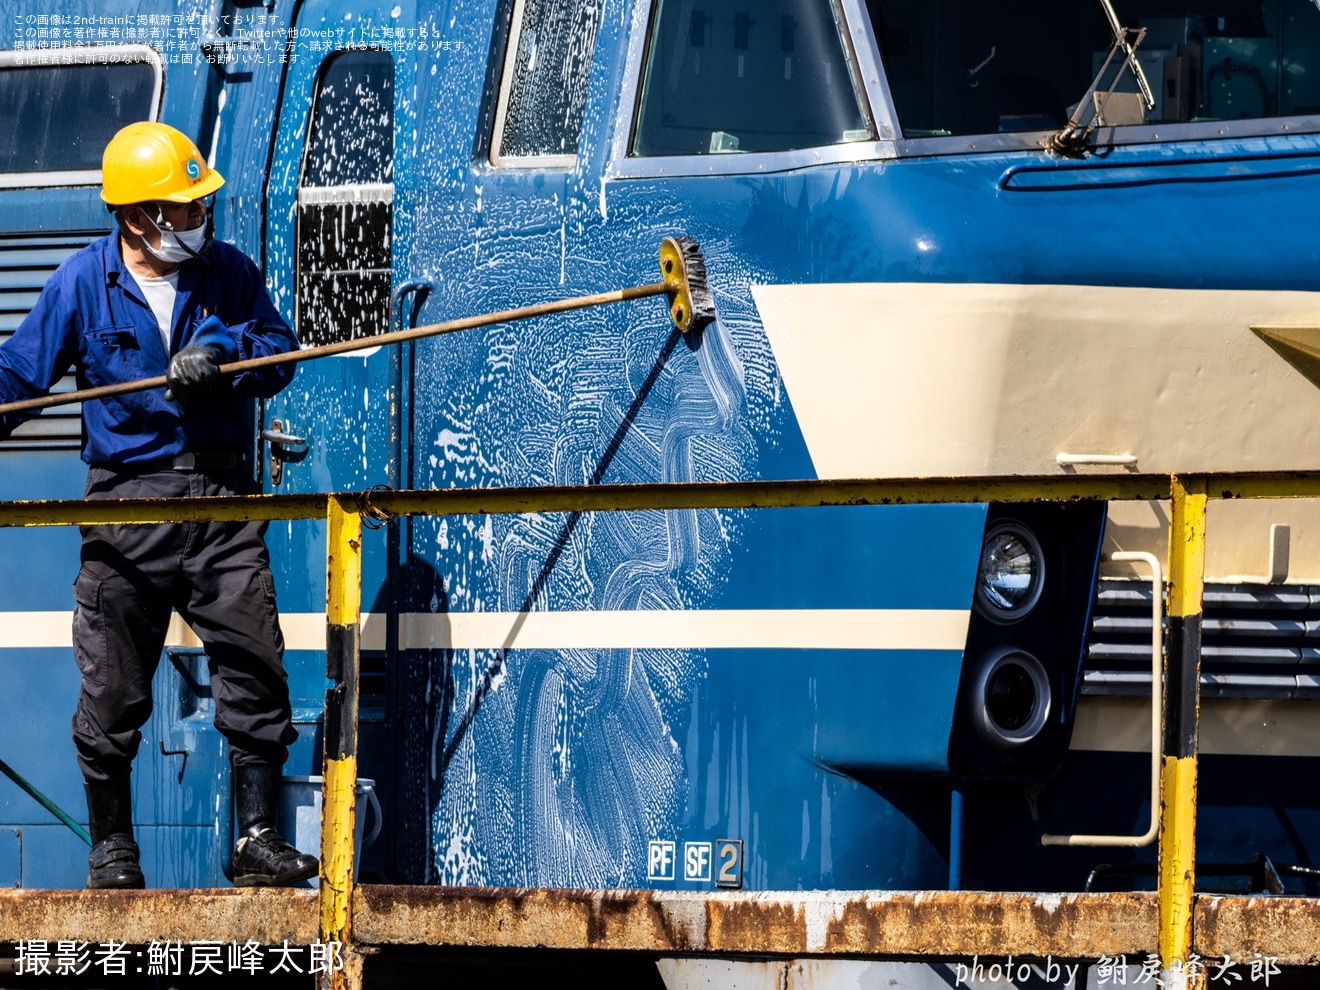 【JR貨】EF66-27が洗車作業中の拡大写真